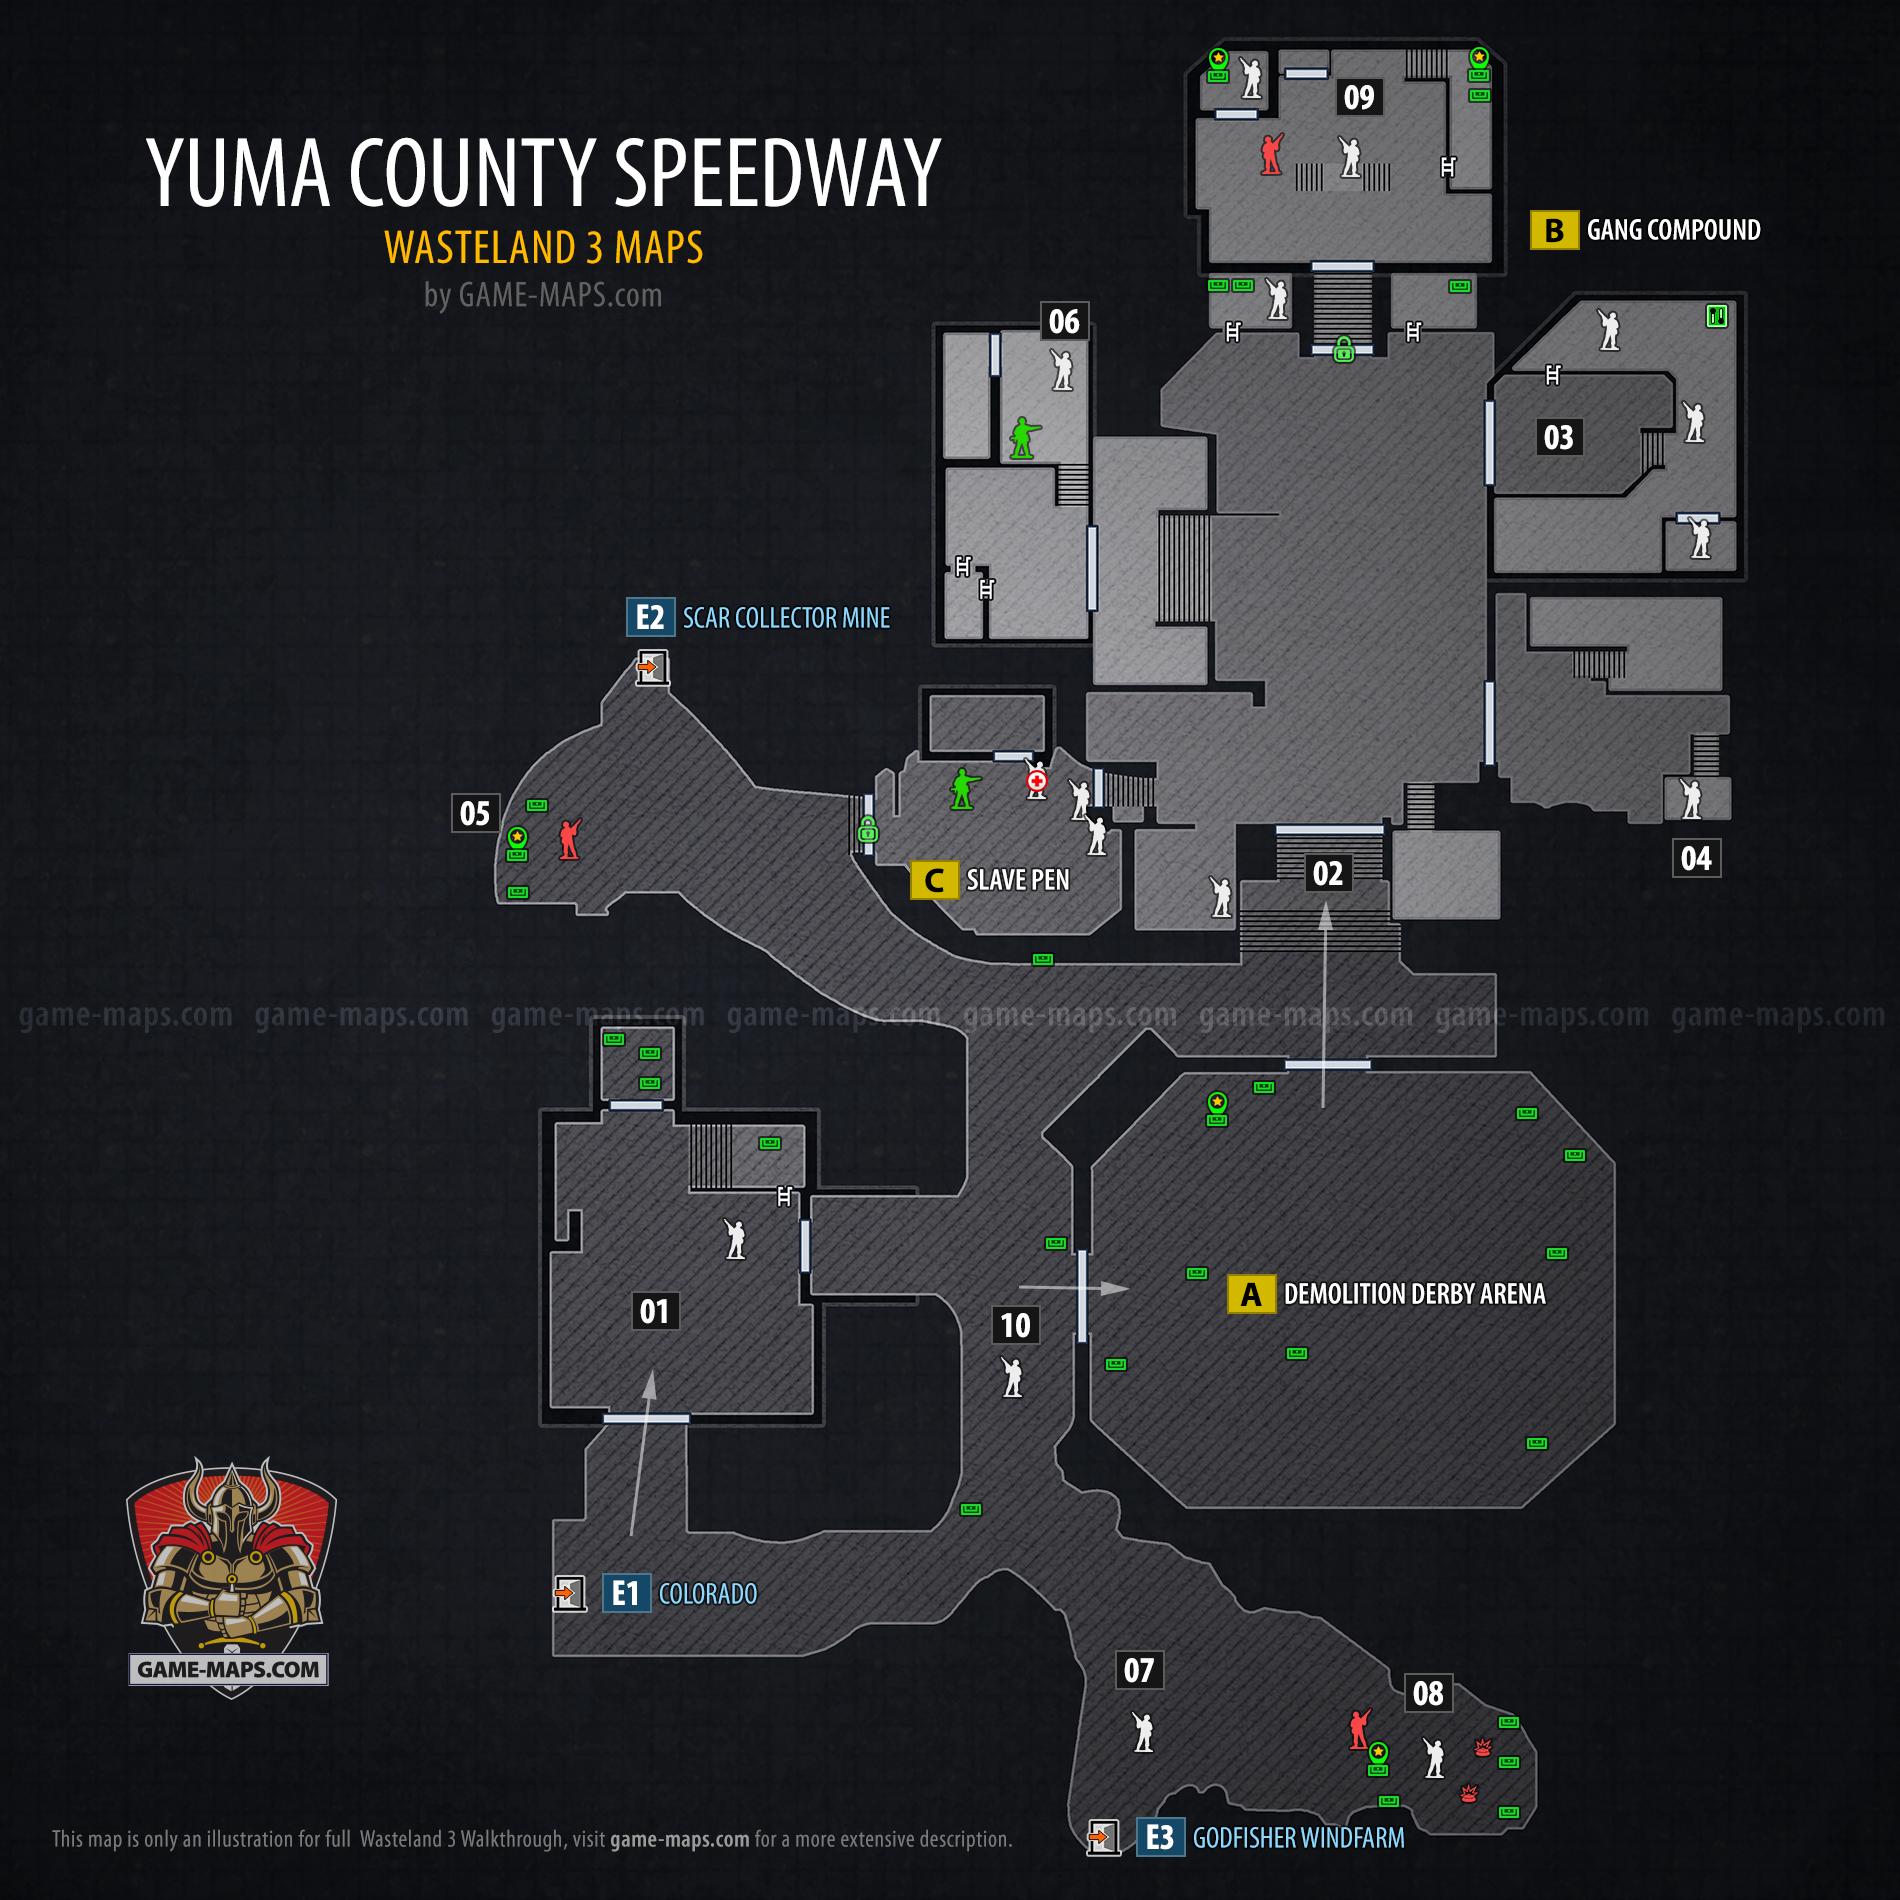 Yuma County Speedway - Wasteland 3